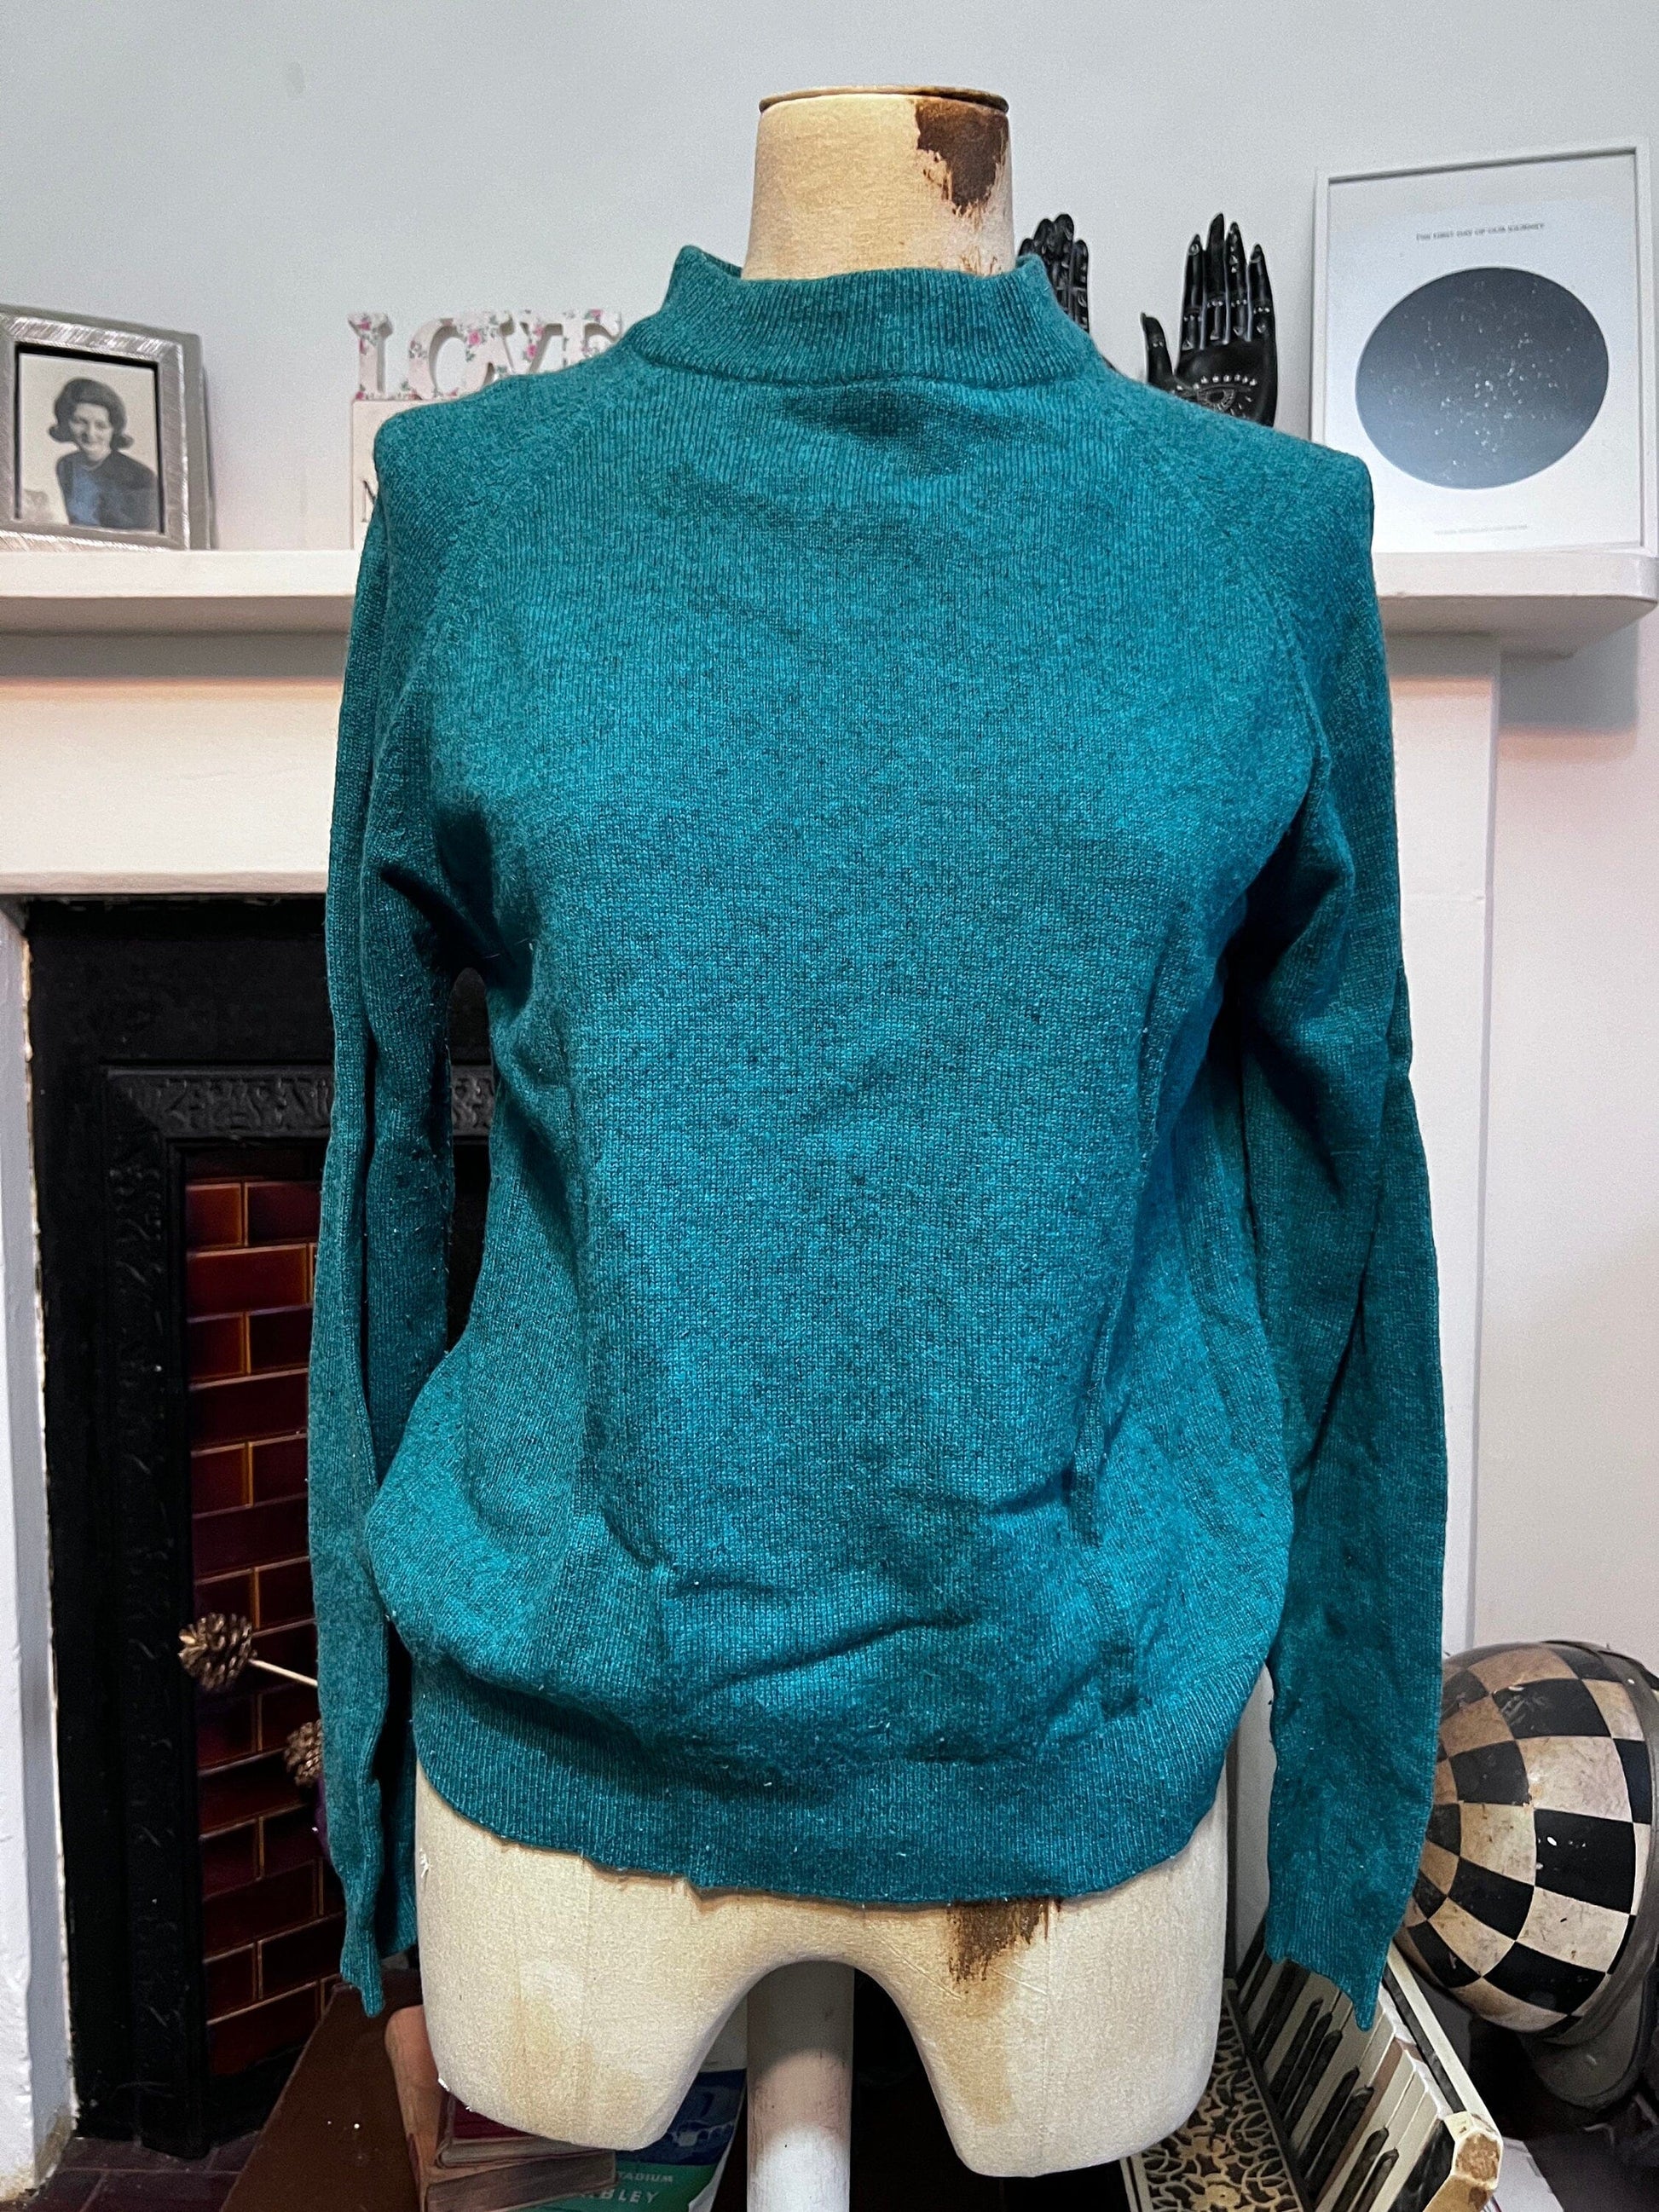 Vintage teal jumper acrylic mix jumper blue green jumper, teal vintage knitwear, vintage pullover, vintage jumper, 1950s, vintage knitwear